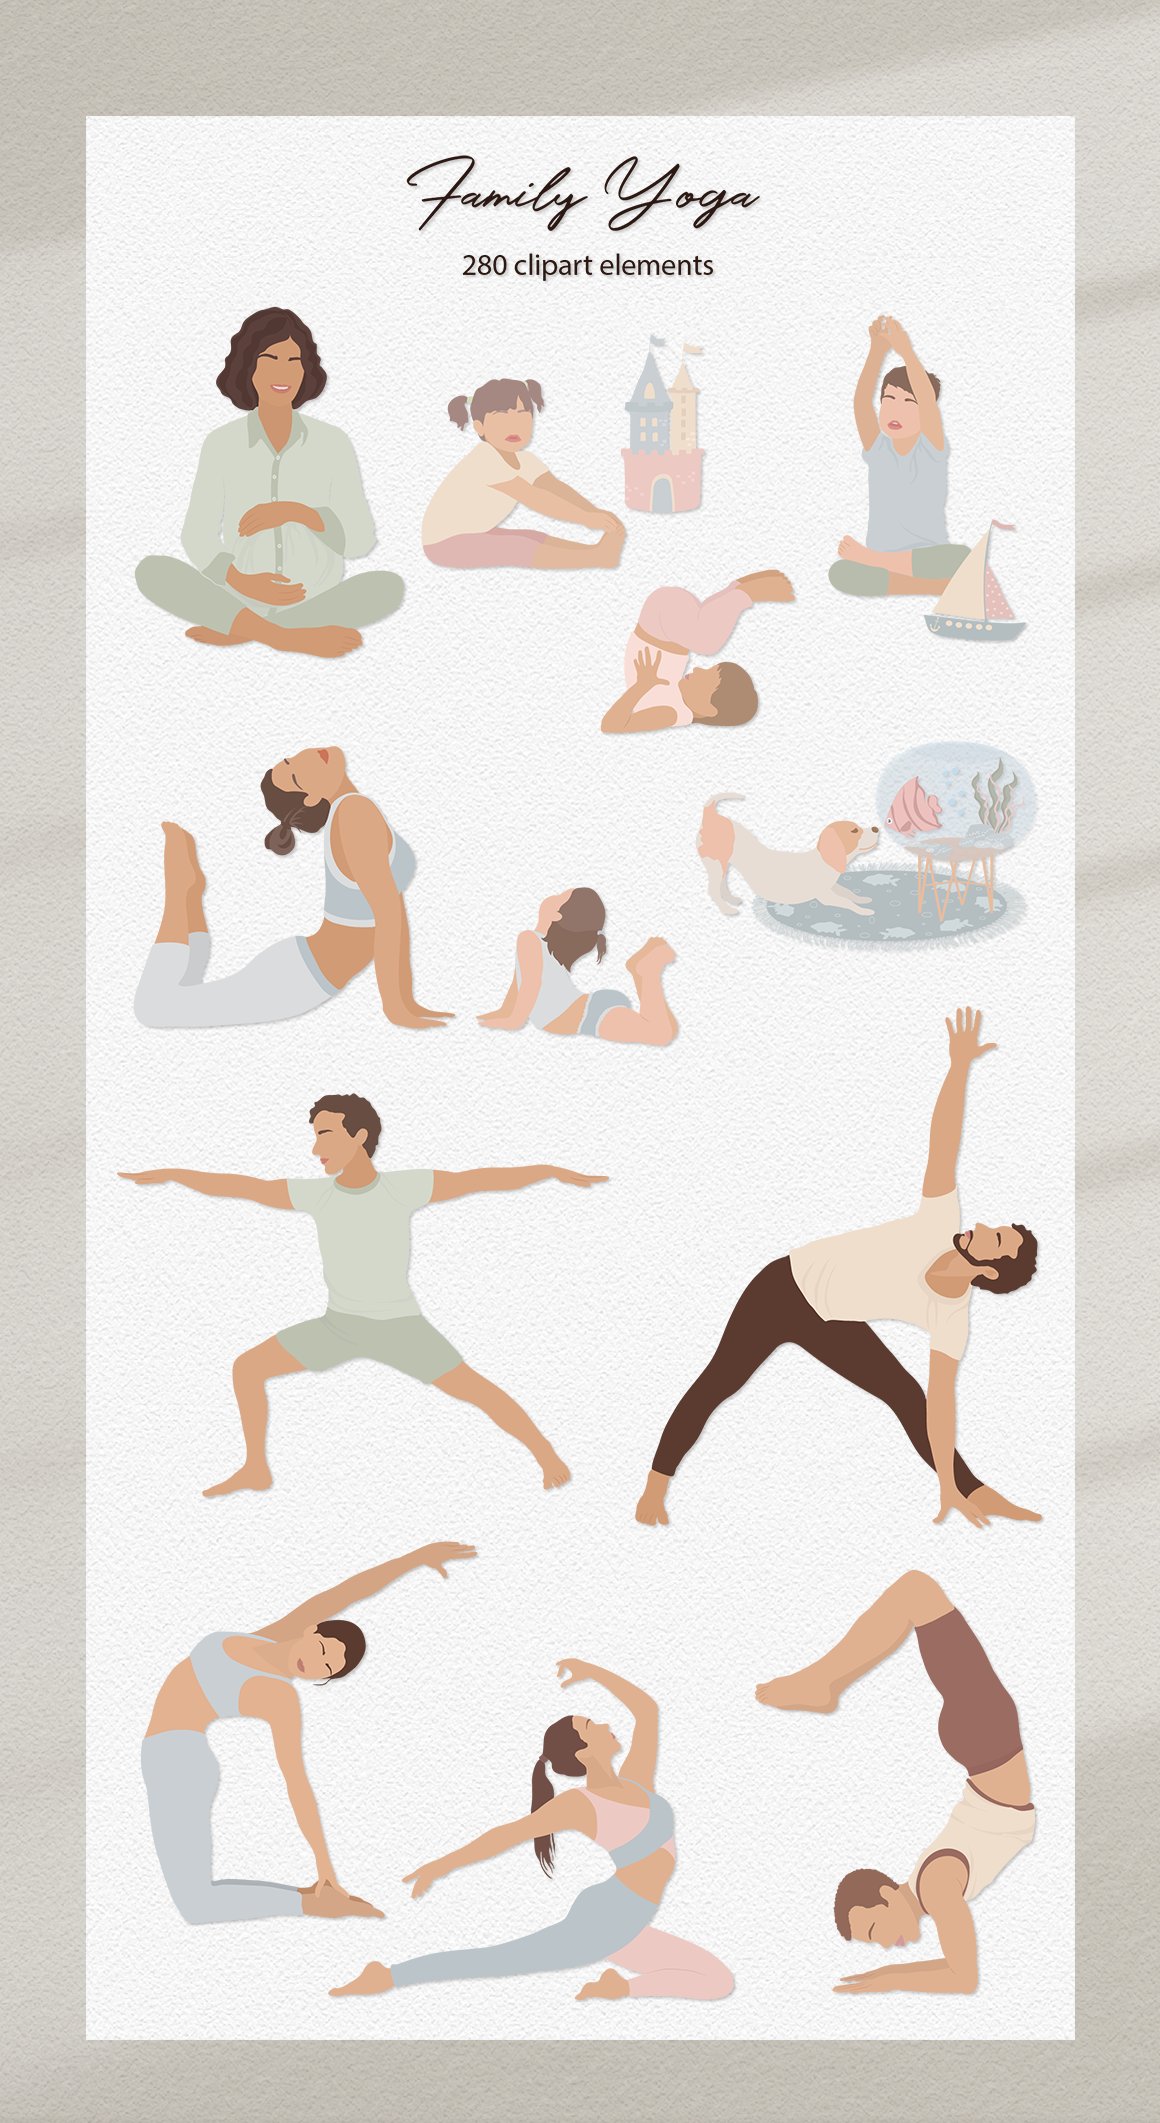 family yoga illustration set 281129 634